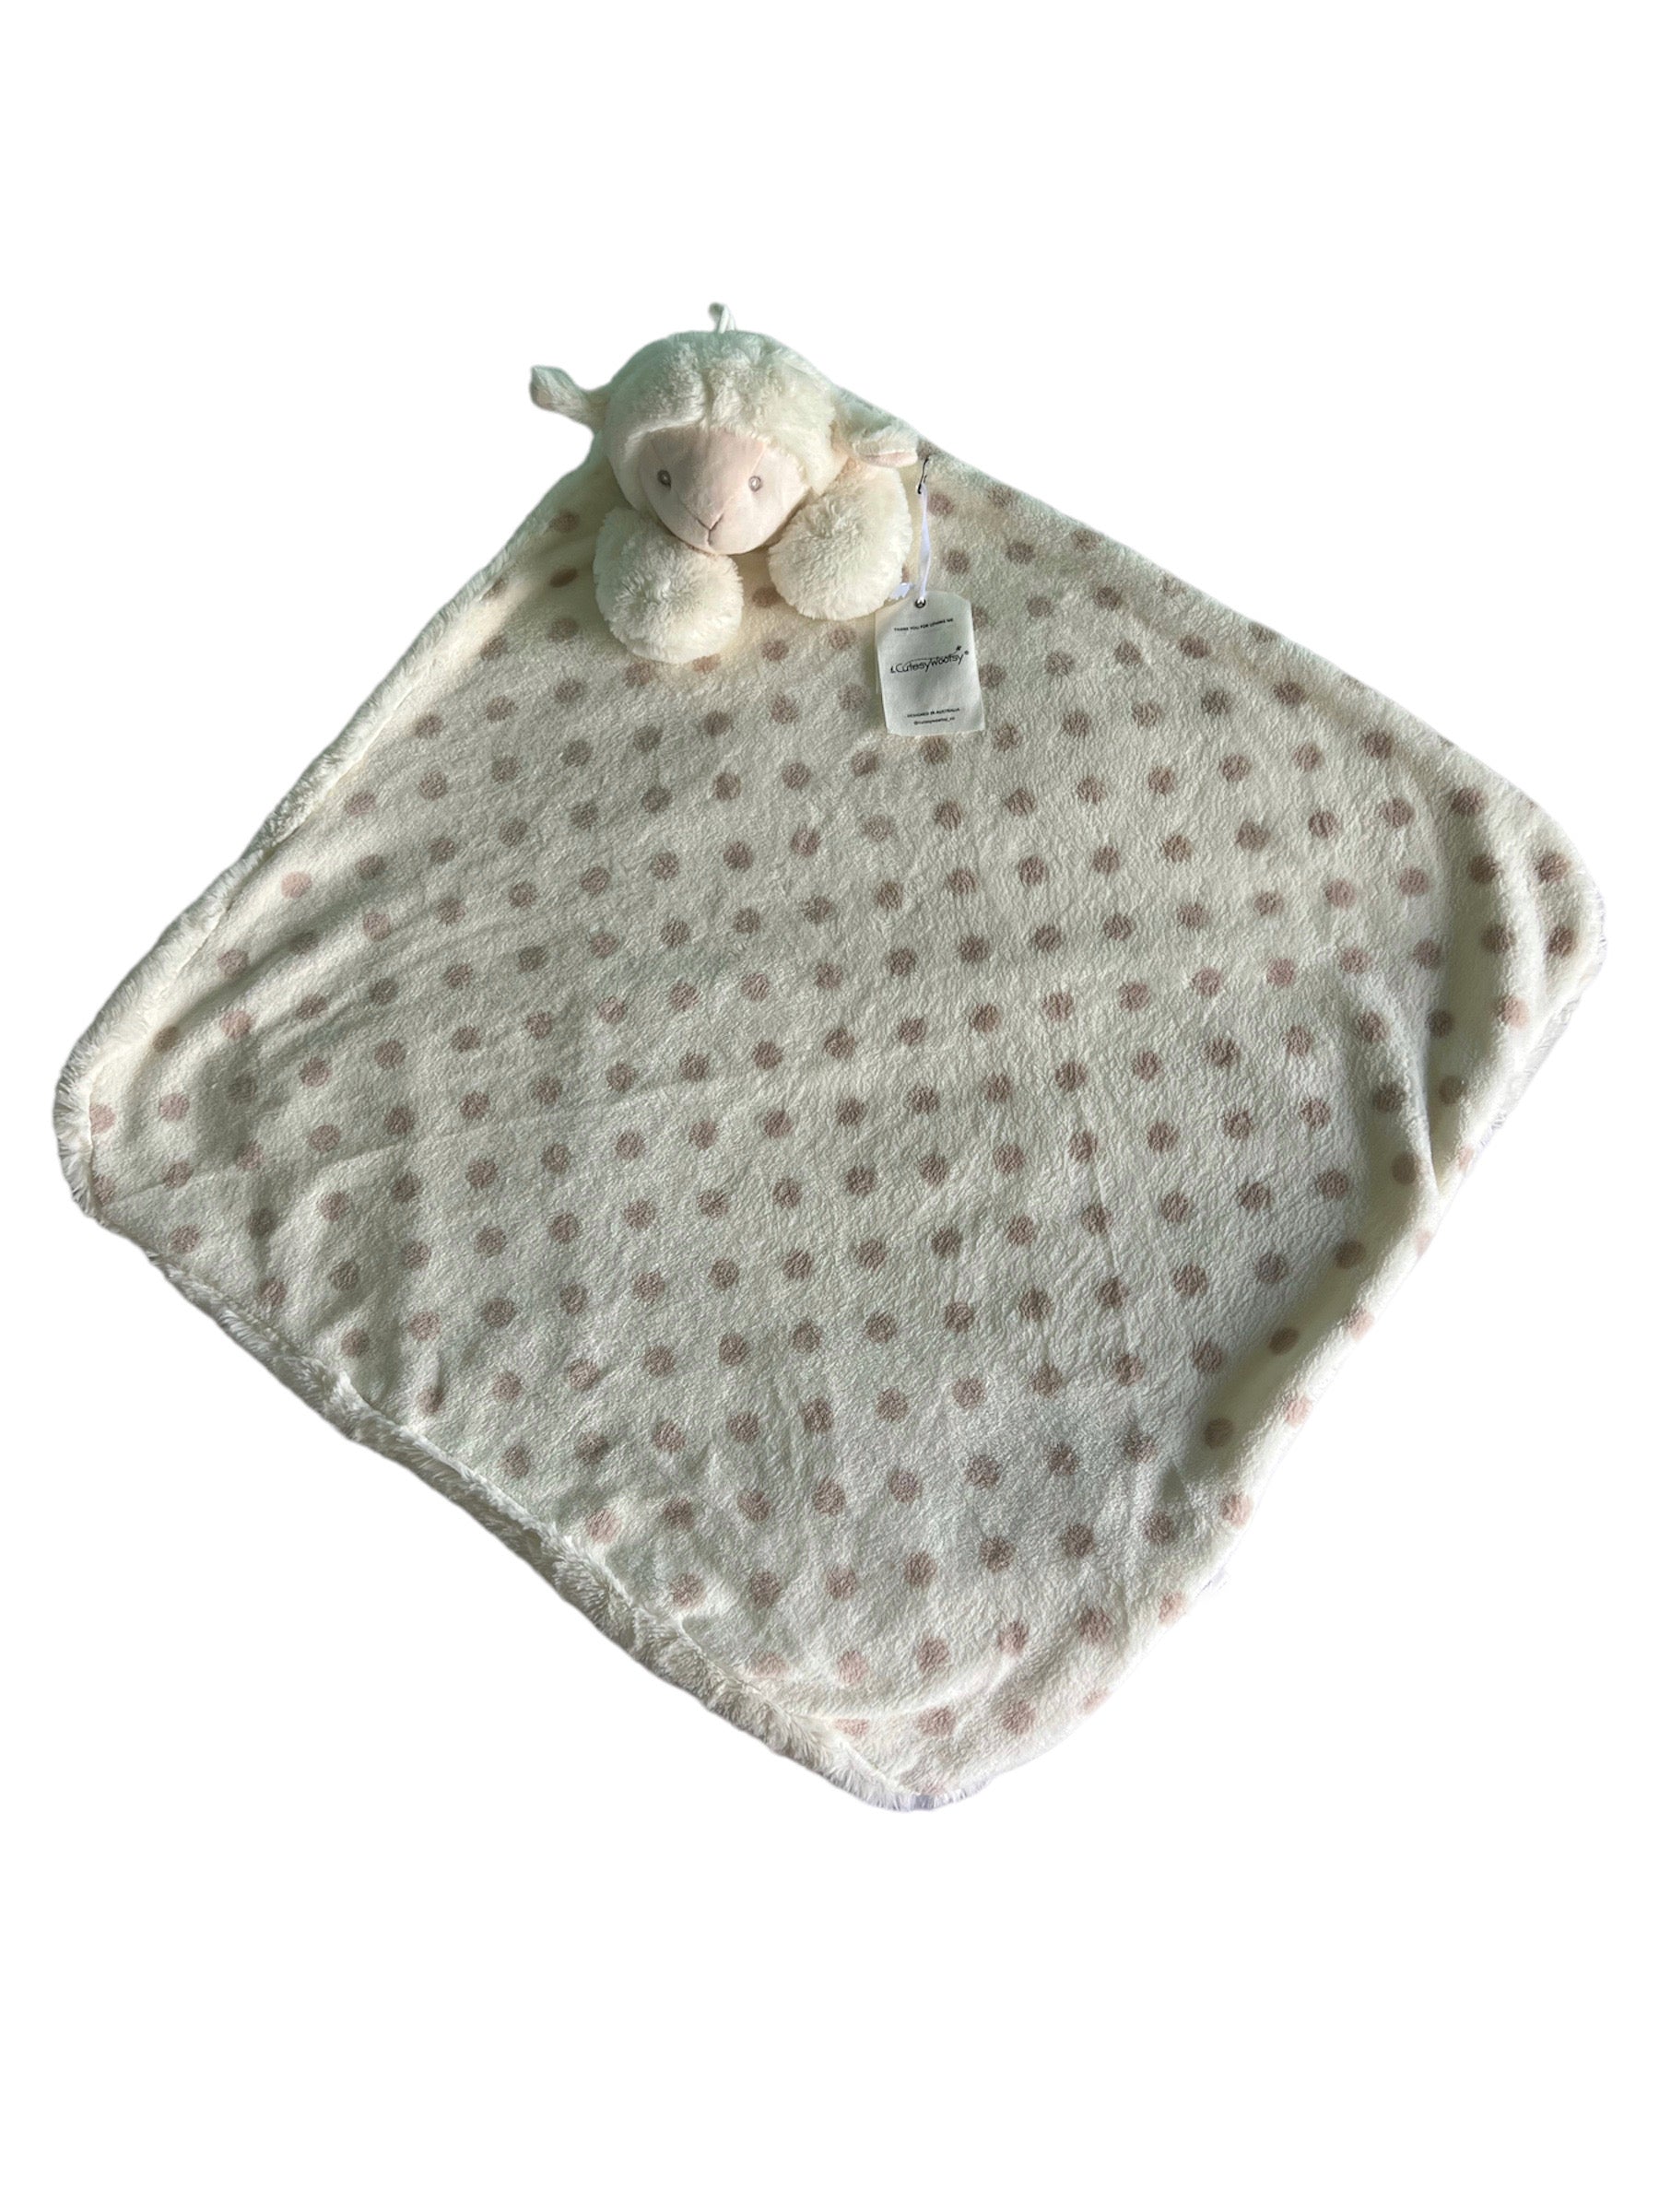 Cozy Delight: Tiffany Lamb Coconut Cream Malteaser-Coloured Polka Dot Jumbo Comforter Blanket with Darling Lamb Accents